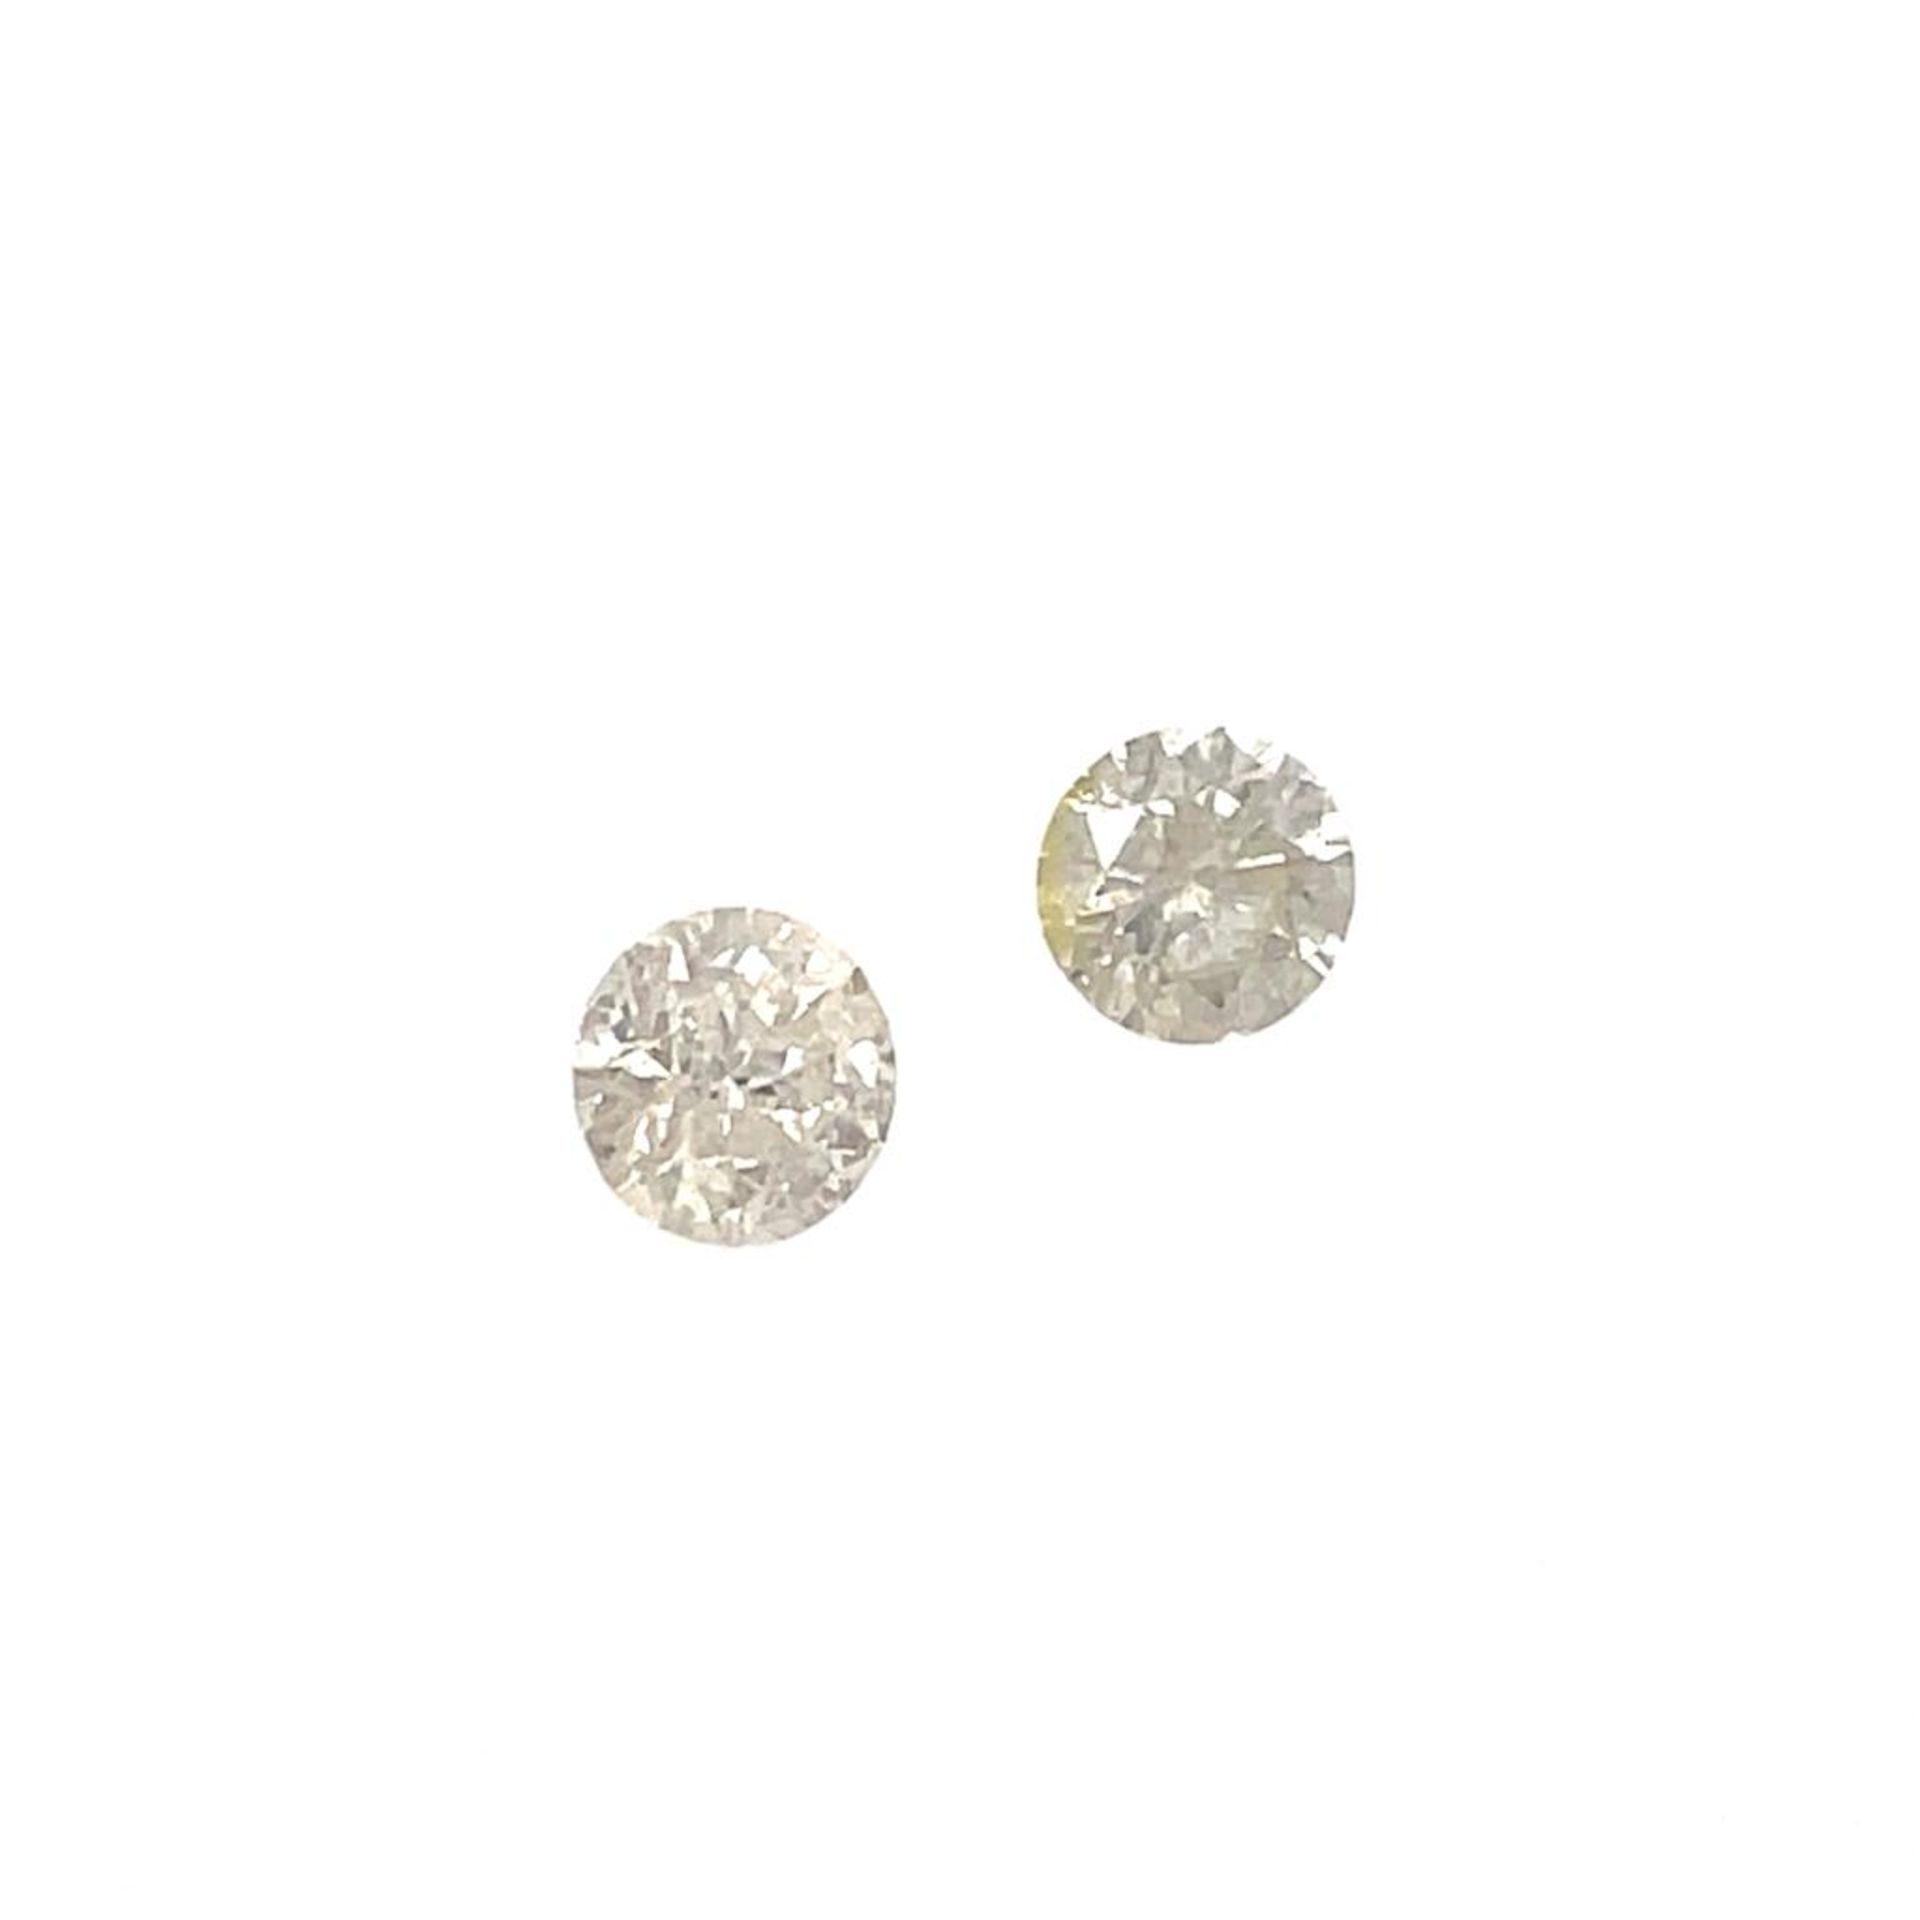 2 DIAMONDS 0.45 CT TOTAL J -K - I2 - BRILLIANT CUT - CERTIFICATE NOT PRESENT - C20306-11D - Bild 2 aus 3